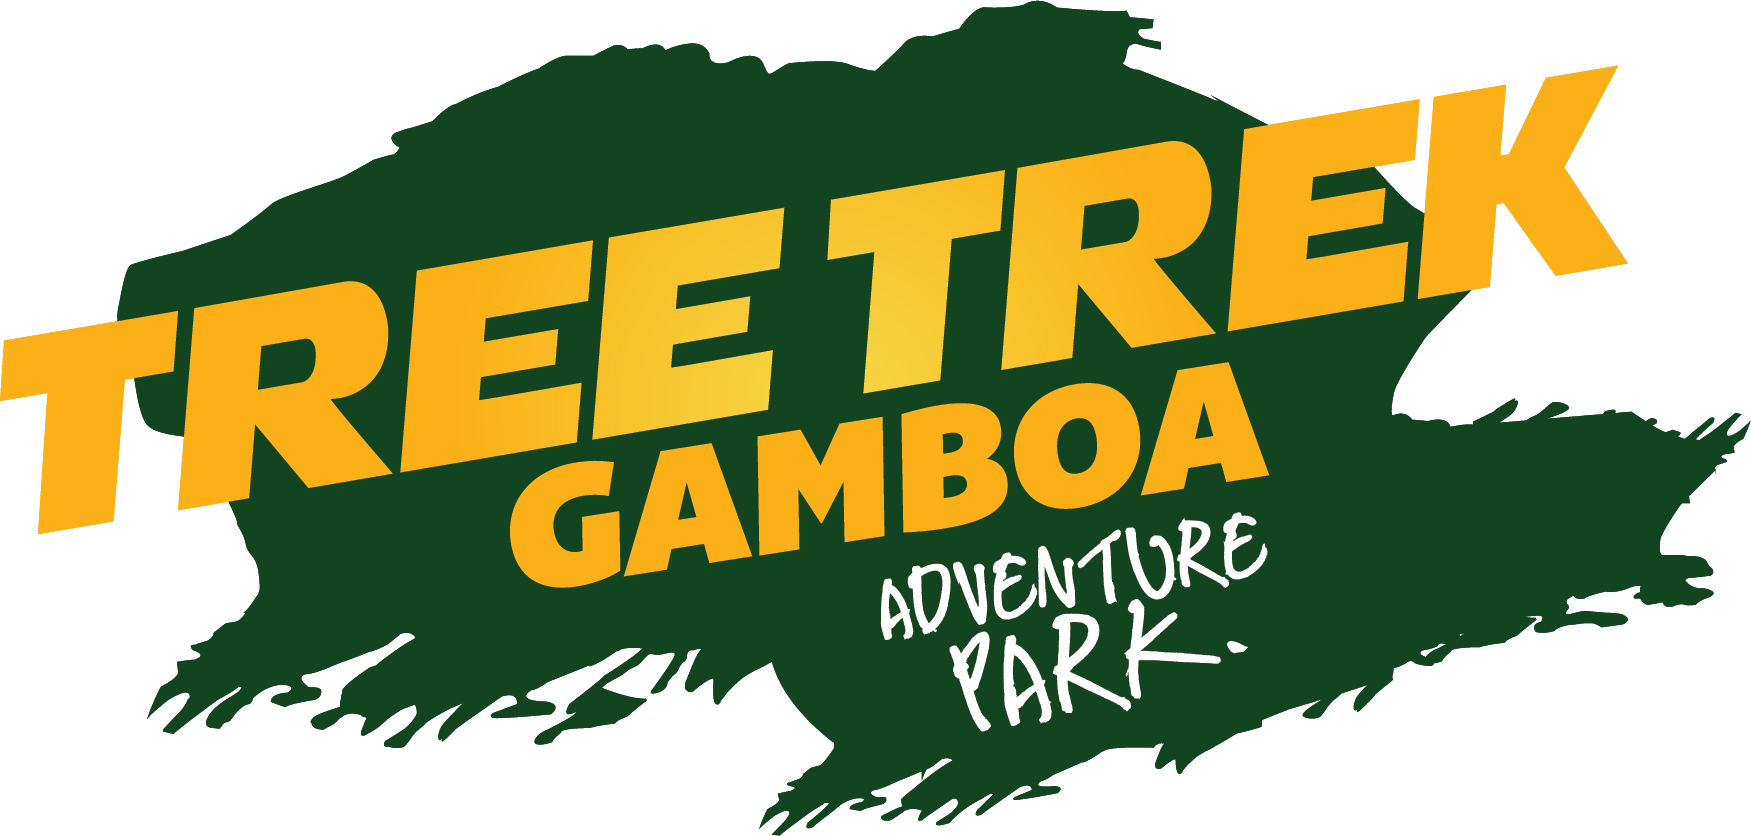 Gamboa Tree Trek